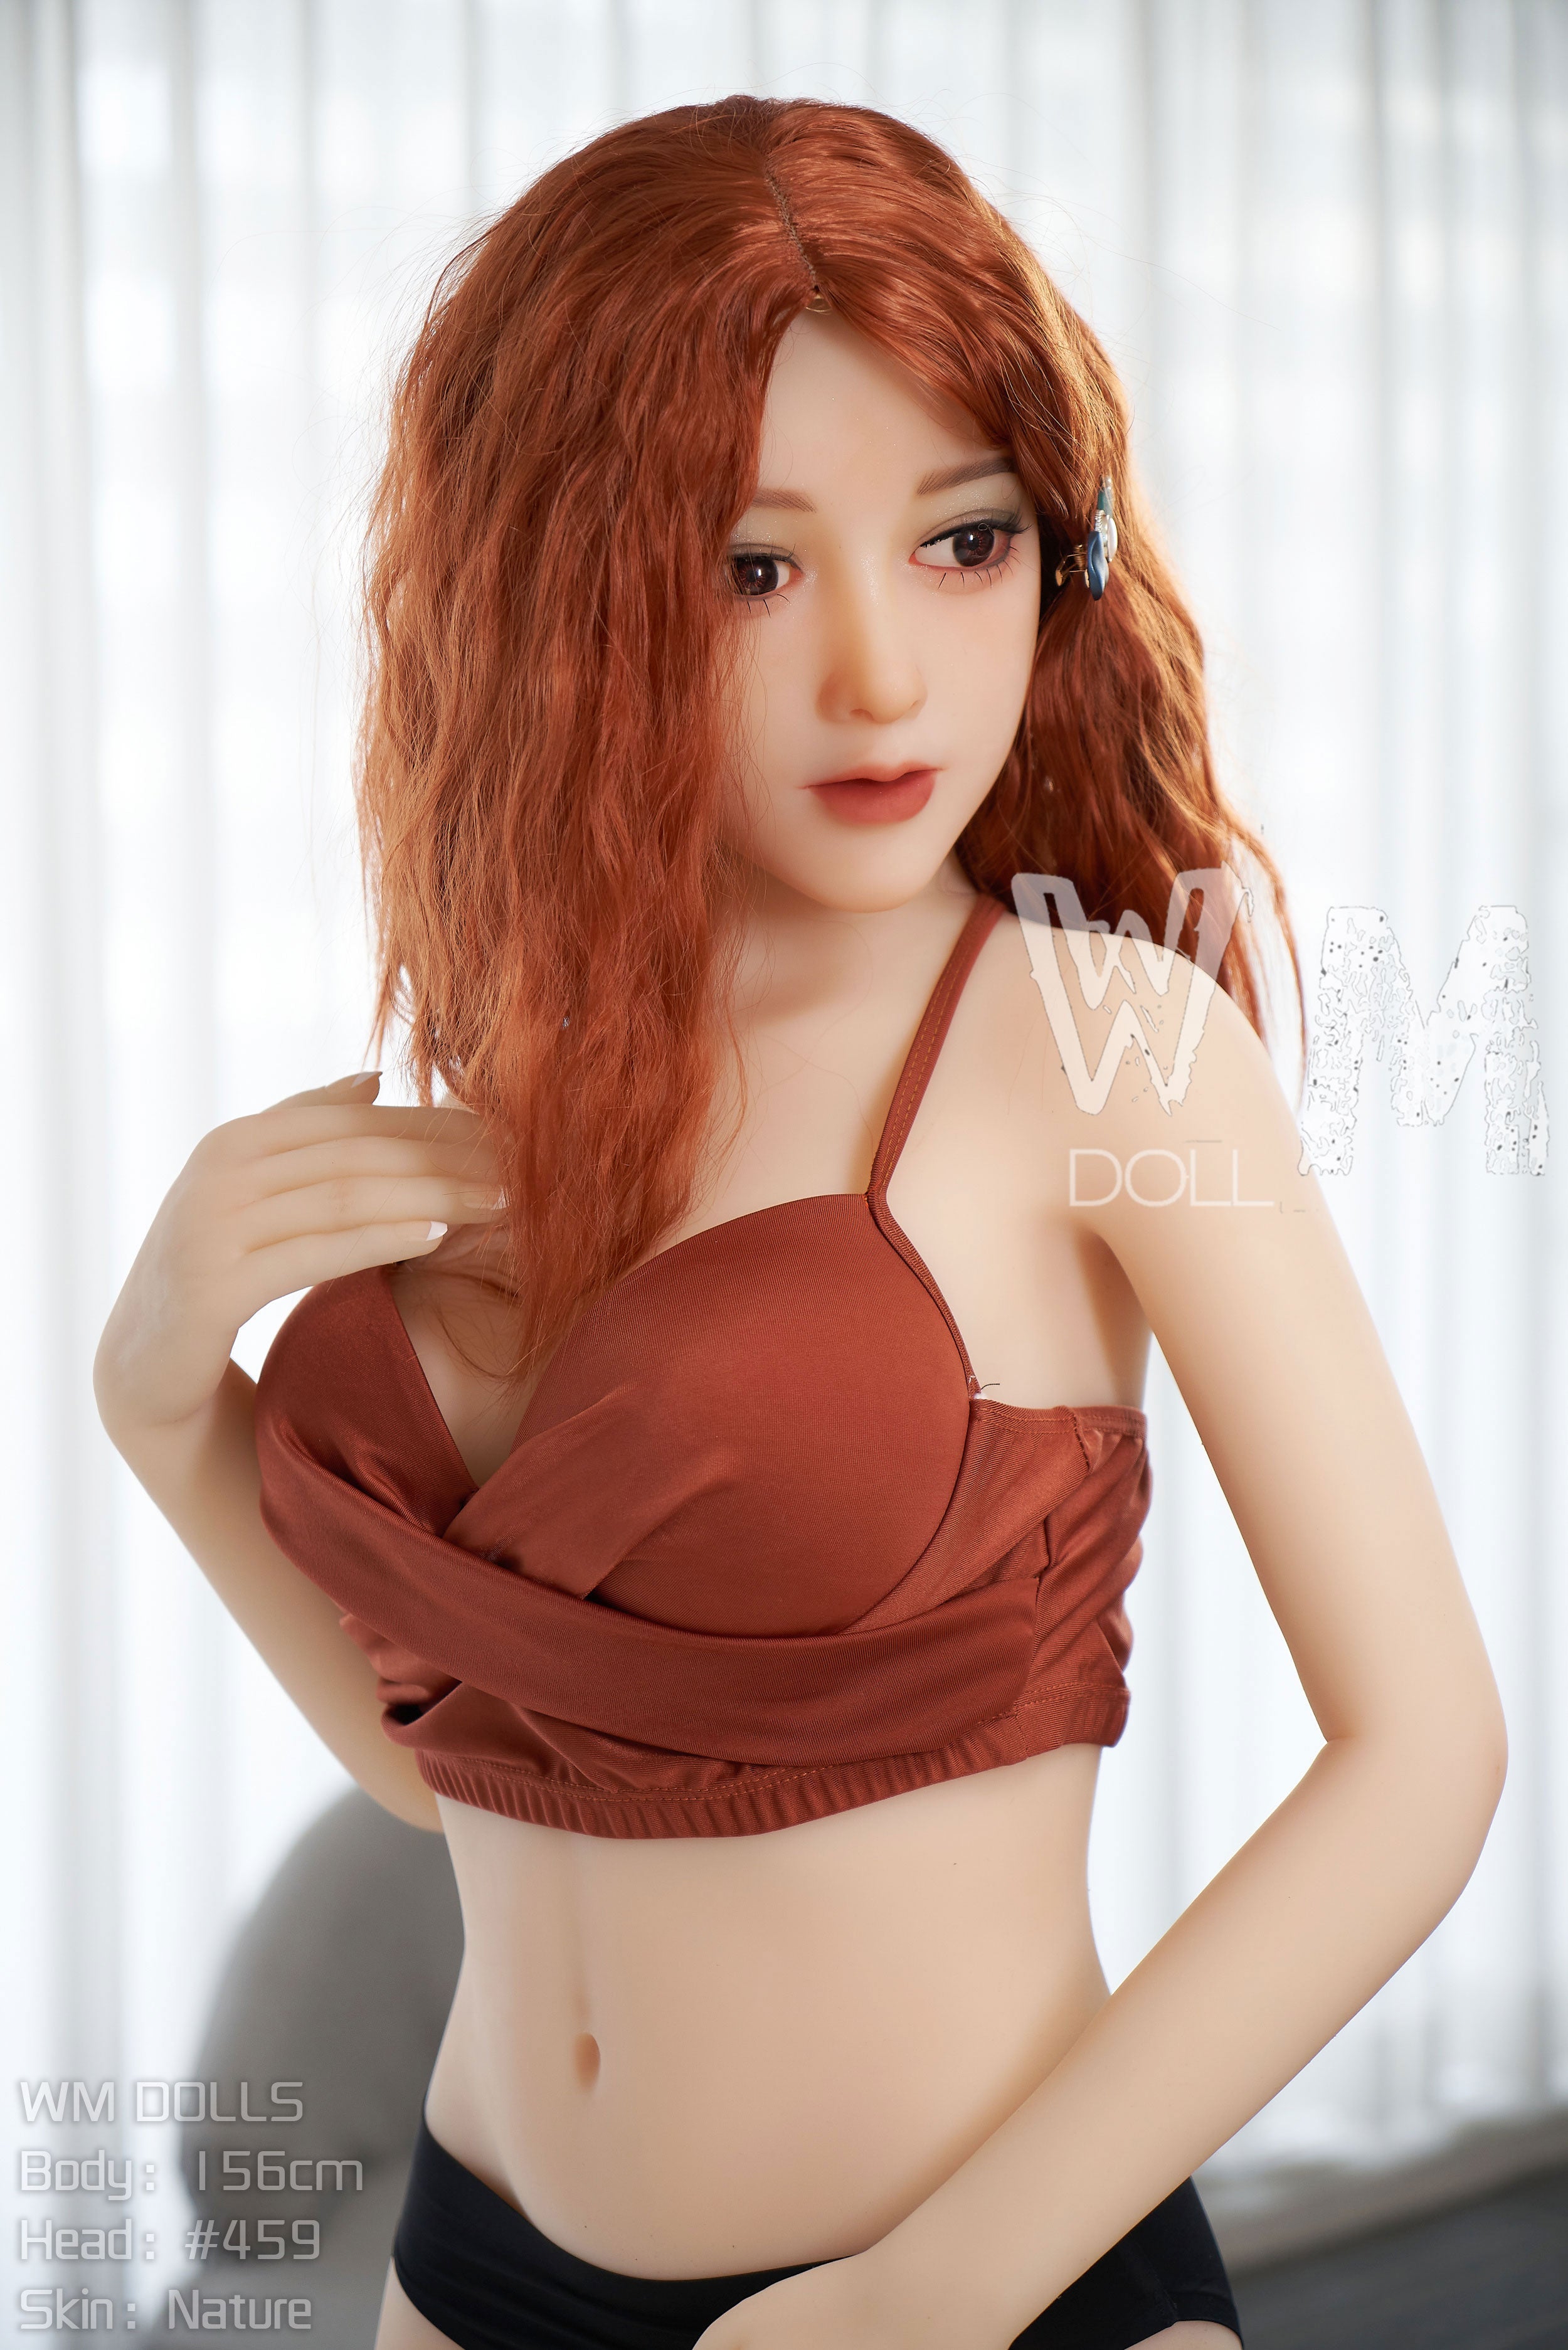 WM Doll 156 cm C TPE - Parker | Buy Sex Dolls at DOLLS ACTUALLY